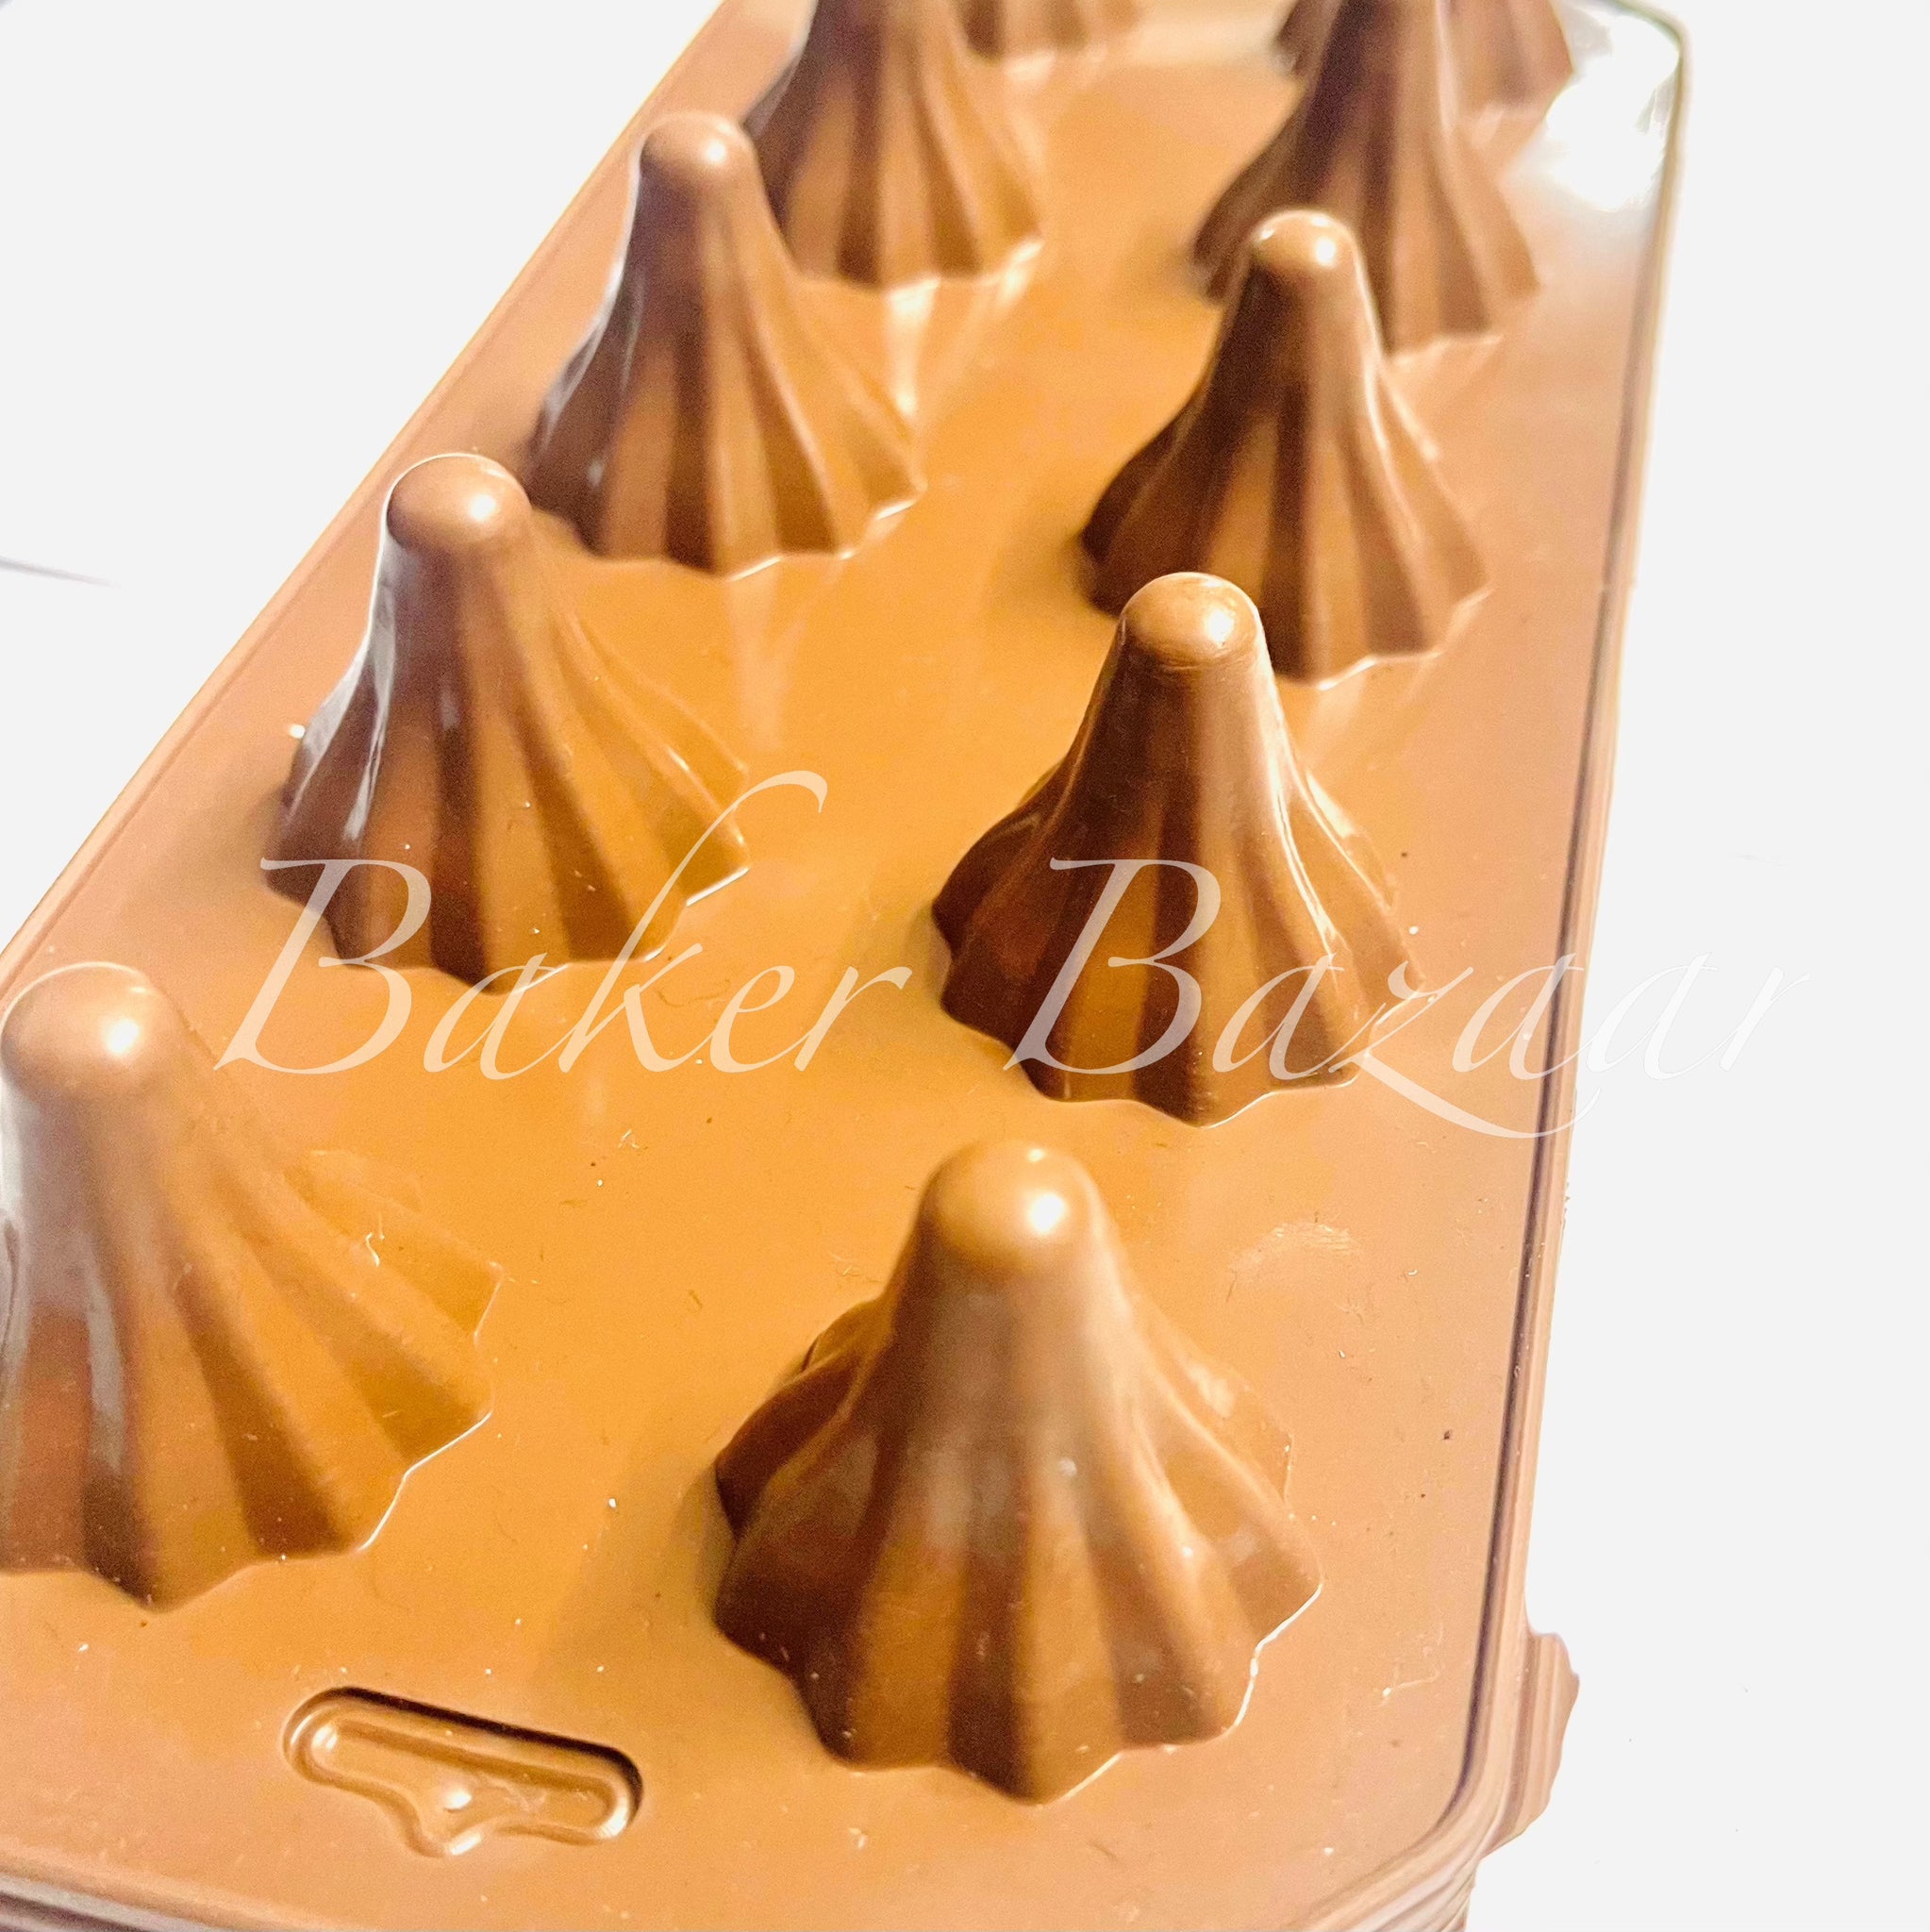 Modak Mould , Modak Shape 10 in 1 Chocolate Mould| Silicon Brown Chocolate Moulds for Ganesh Chaturti Festivals